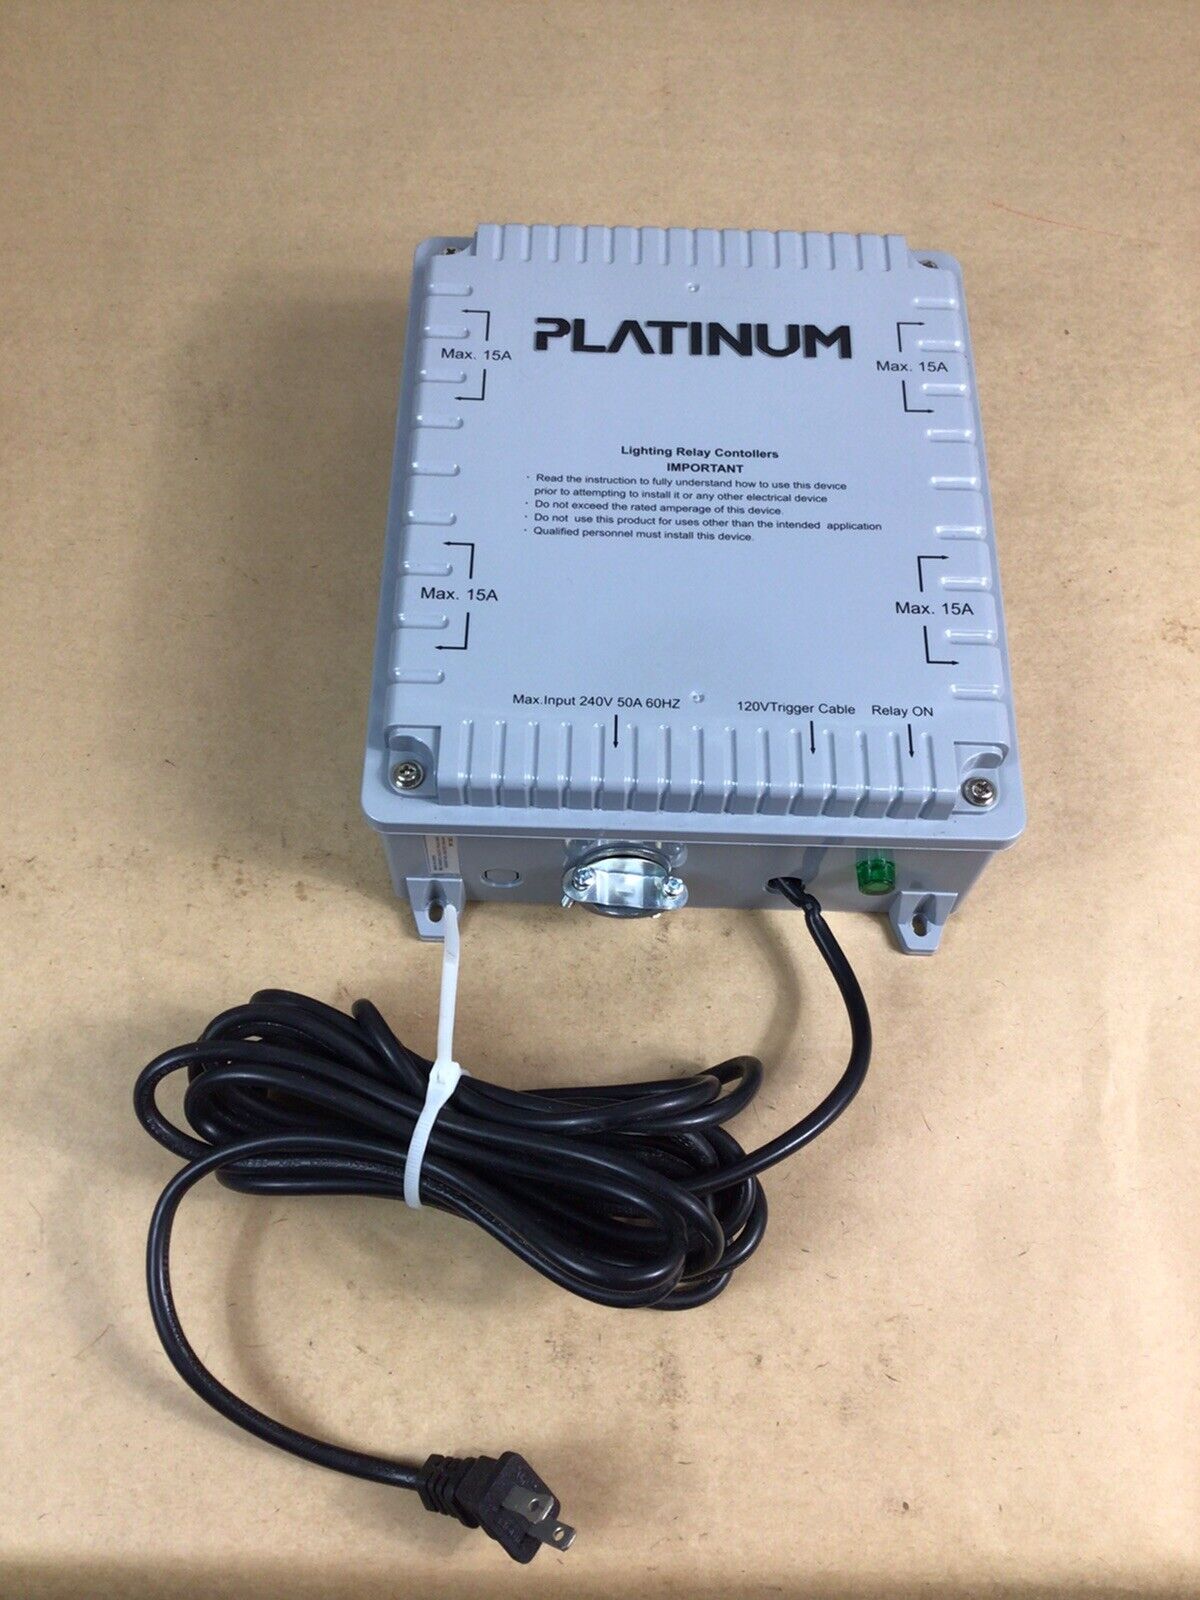 Platinum 8000W 8-Light HID Master Lighting Relay Controller / Indoor Grow 240V